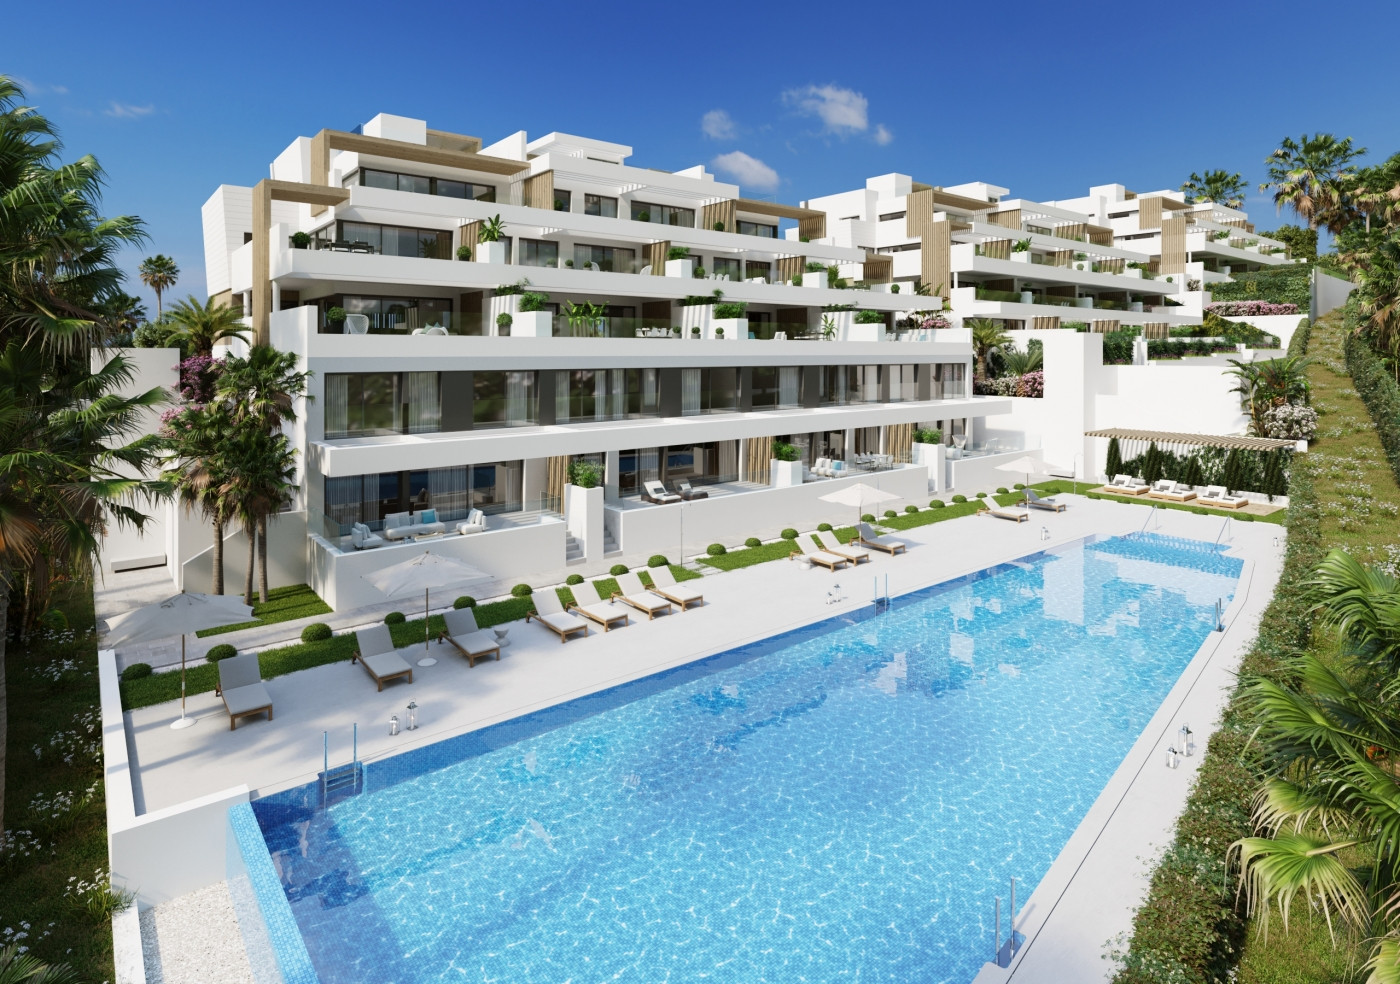 Luxury three bedroom flat with ocean views in Estepona. | Image 1